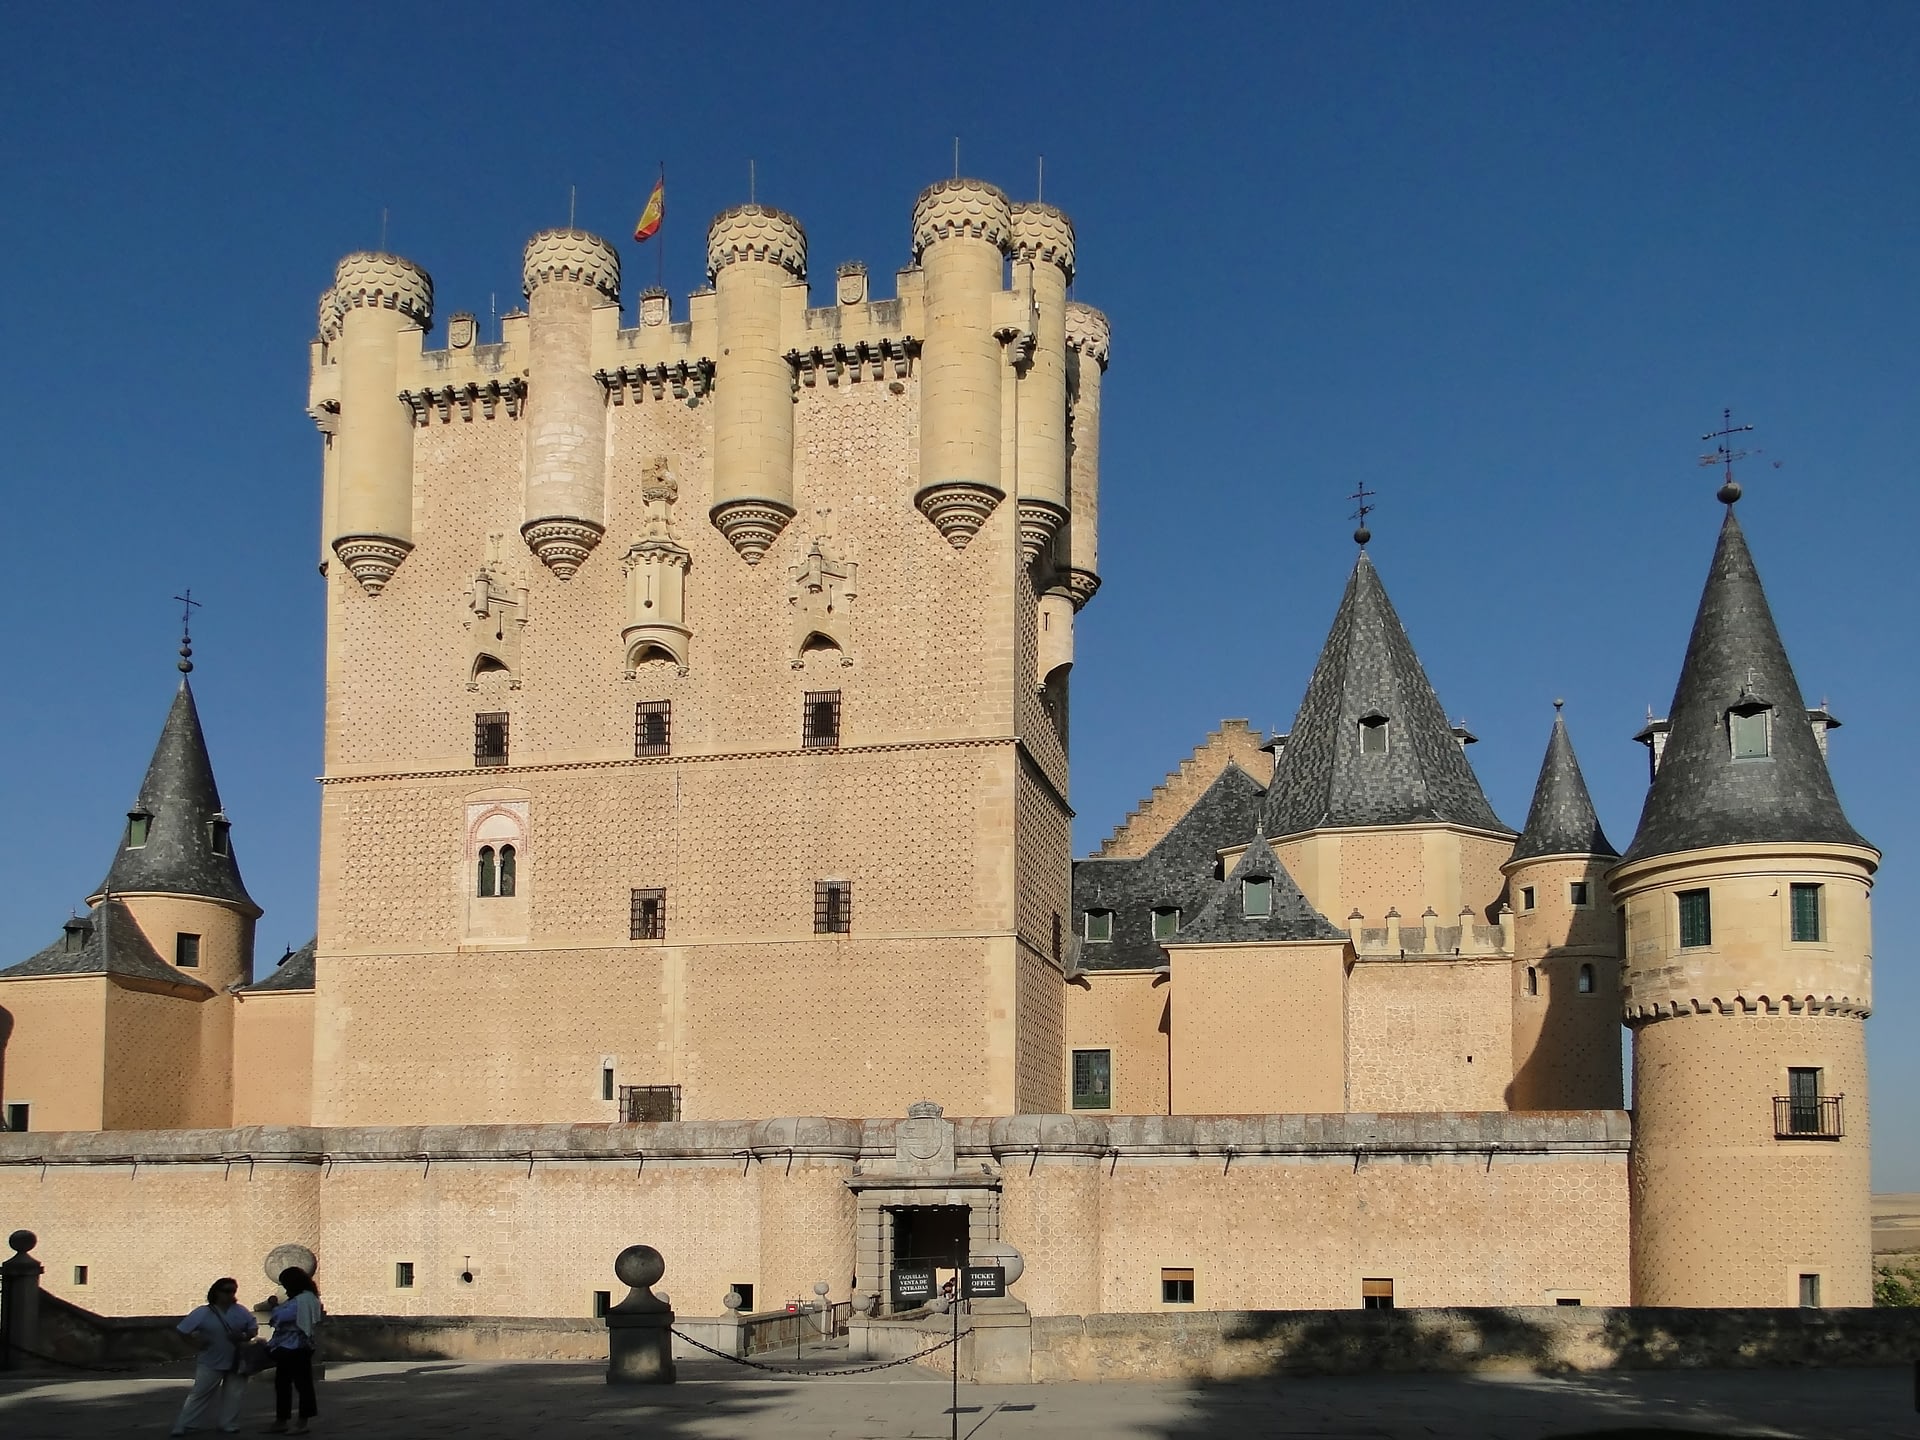 Alcázar de Segovia, Spain; a very enchanting castle